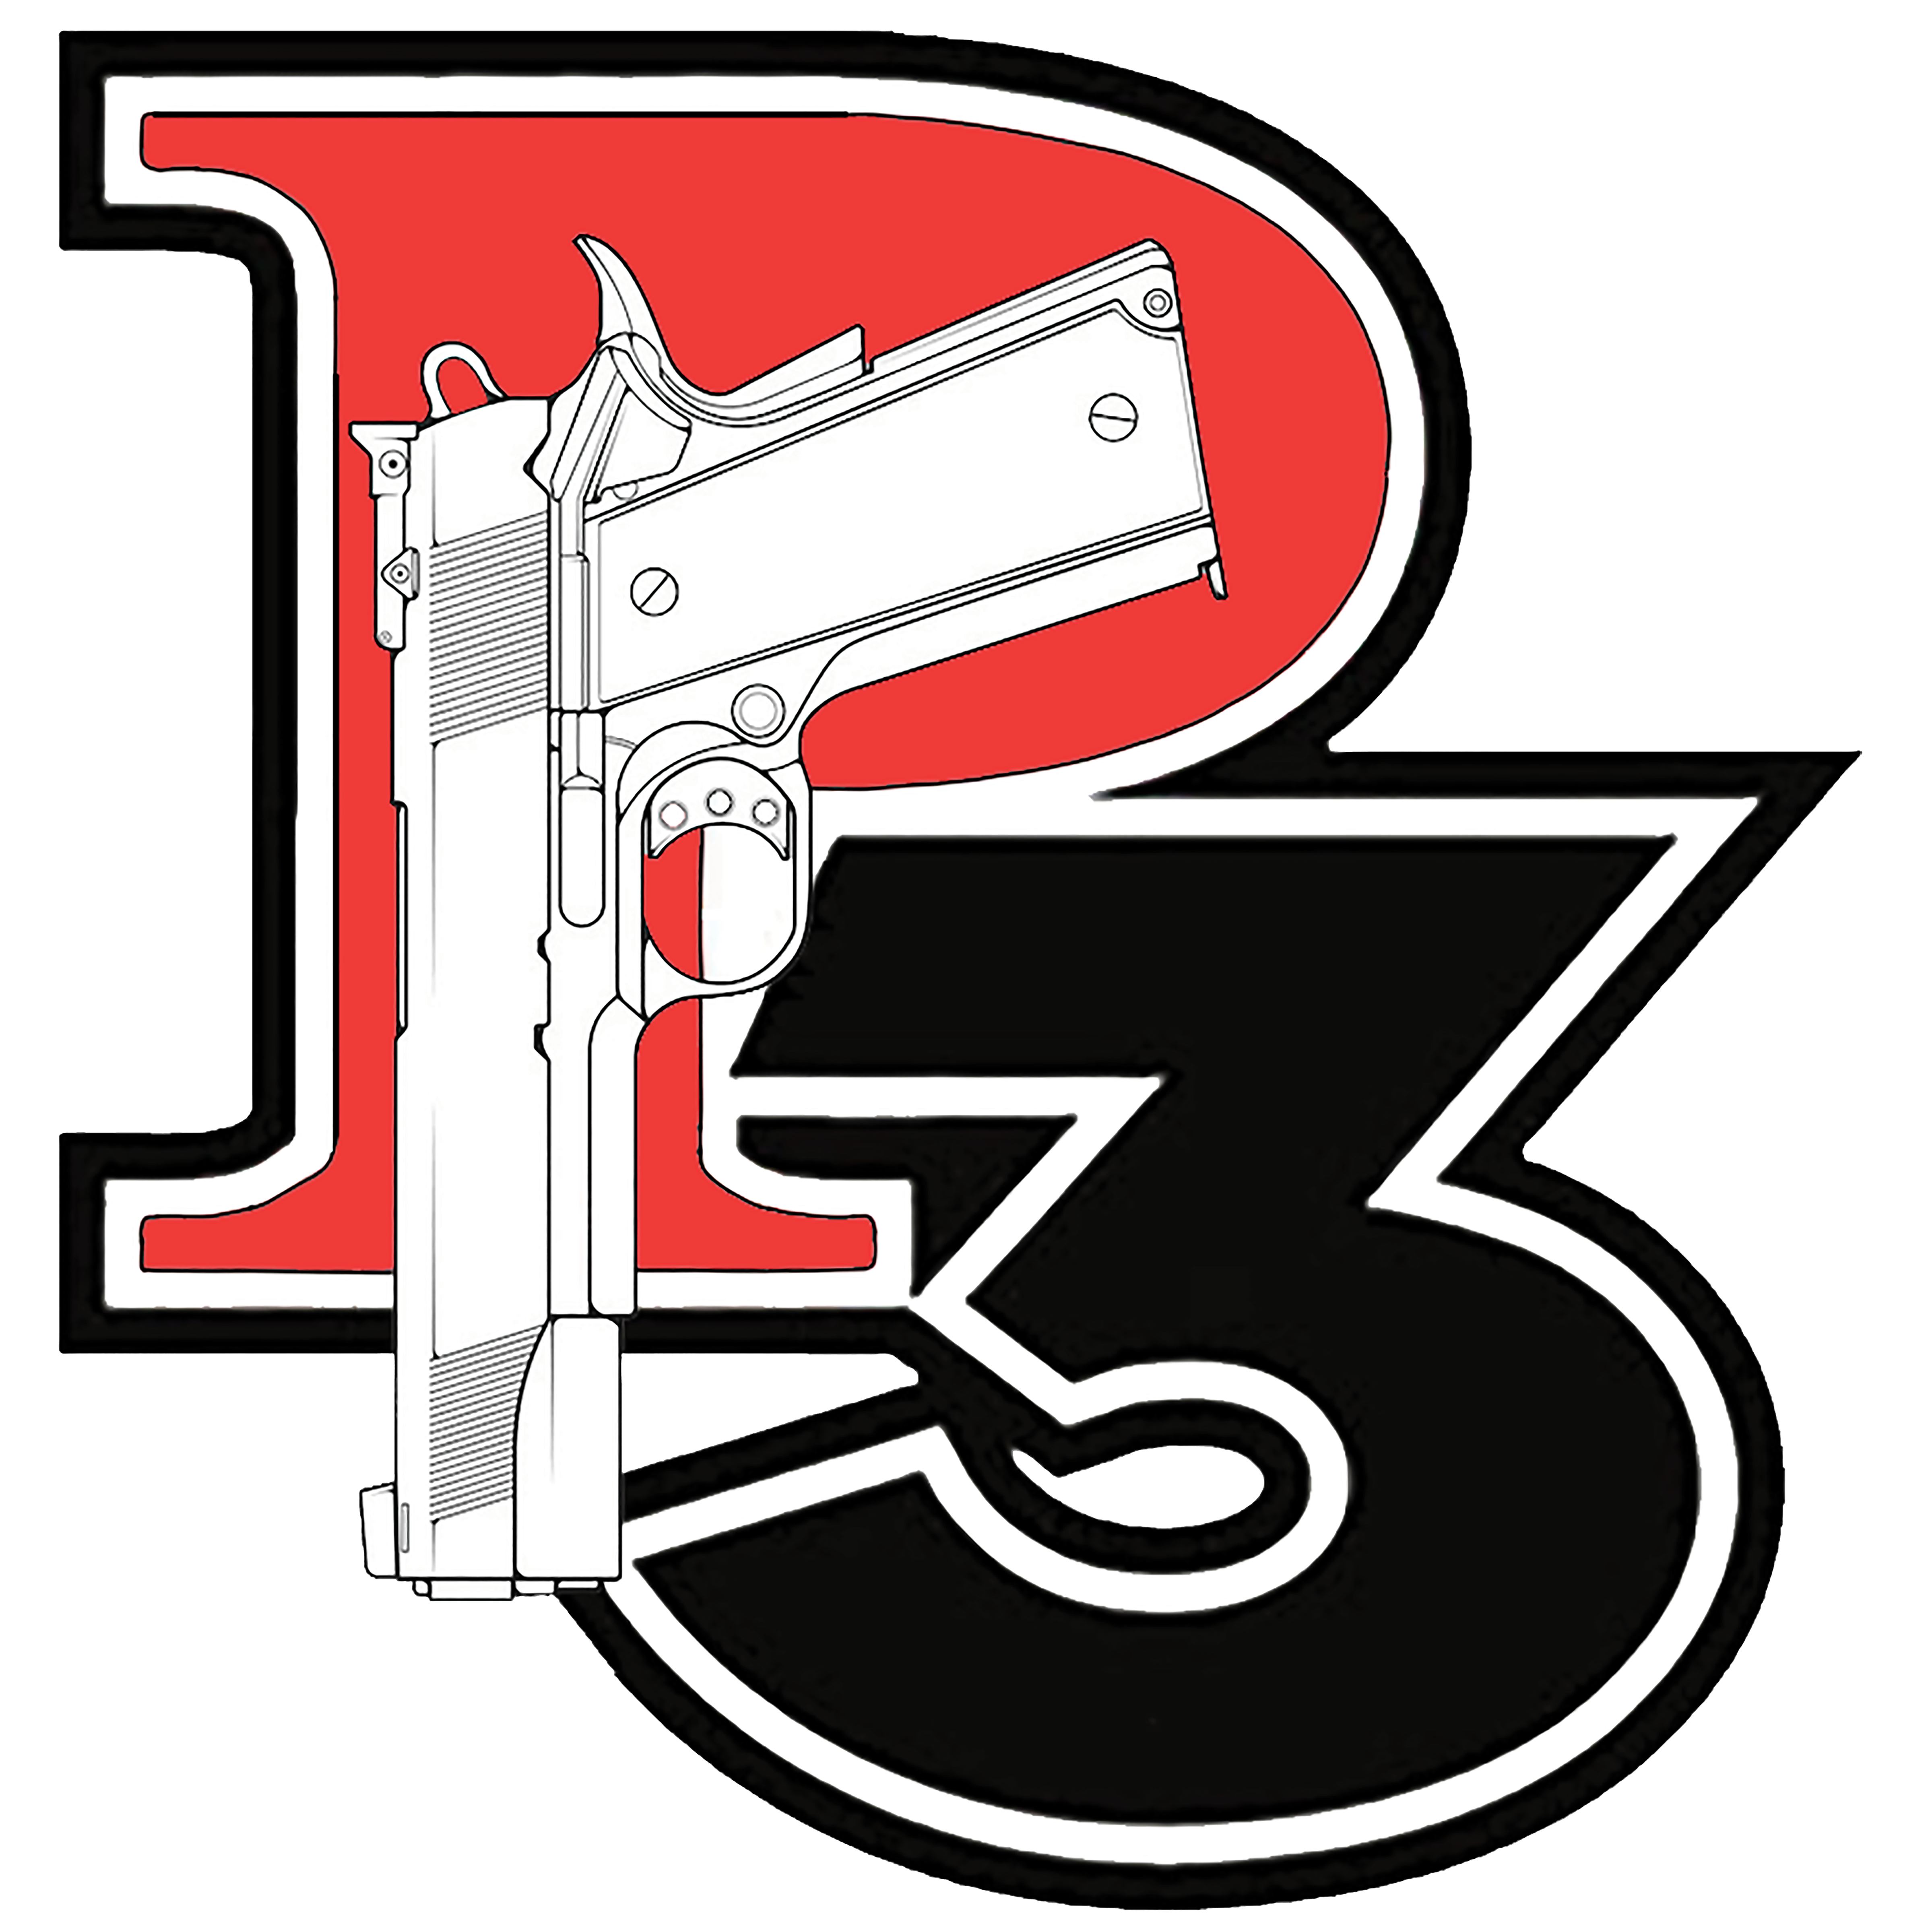 P3 Shooting Specialties